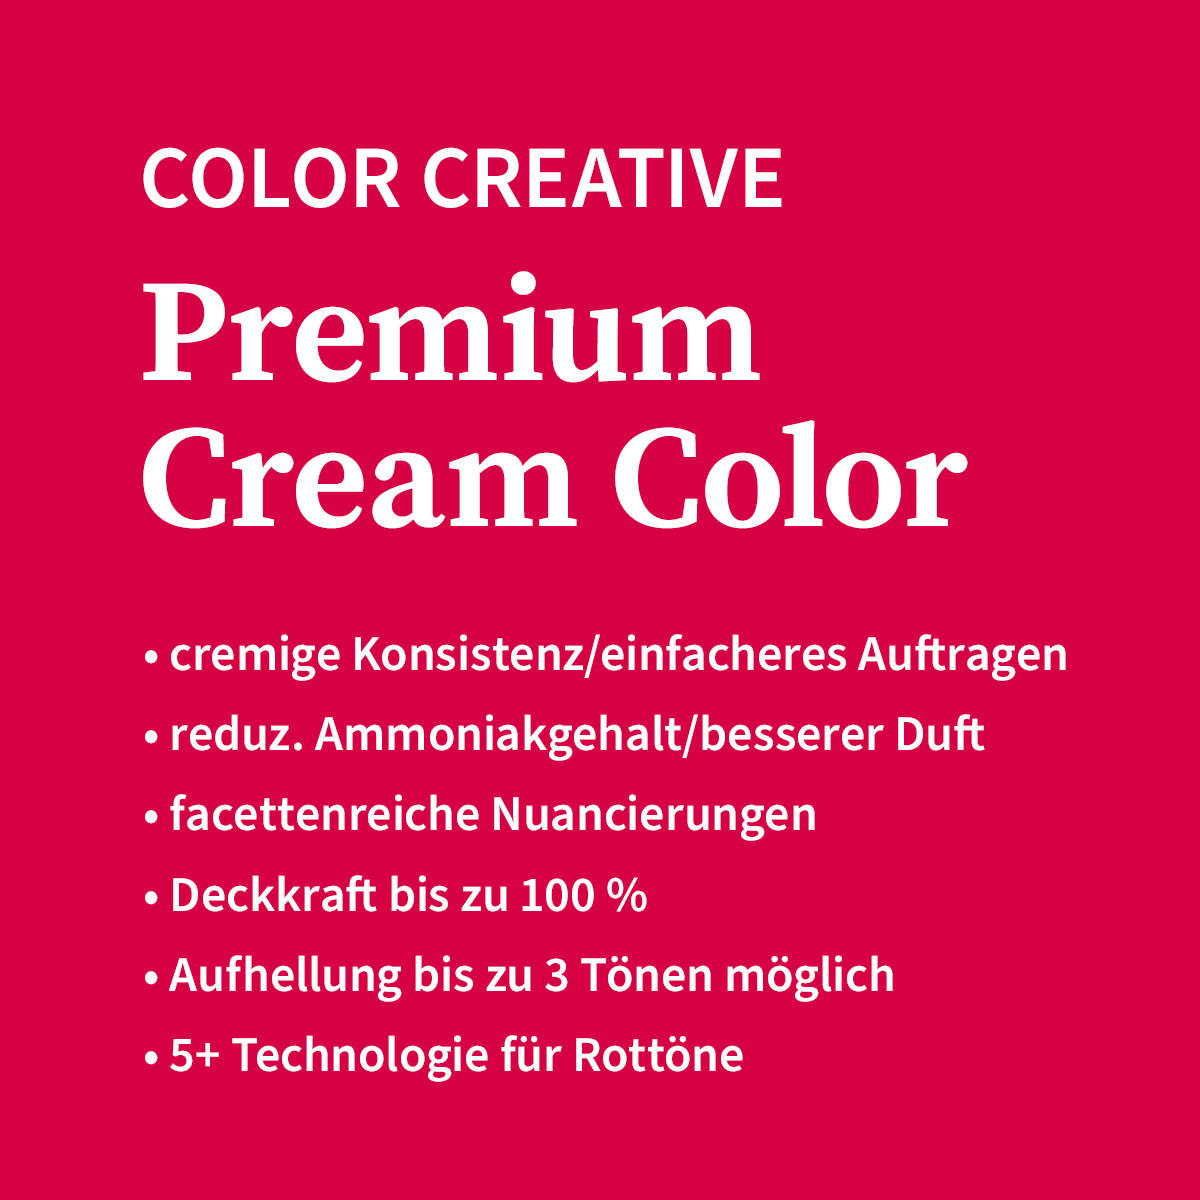 Basler Color Creative Premium Cream Color 6/6 dunkelblond violett, Tube 60 ml - 4